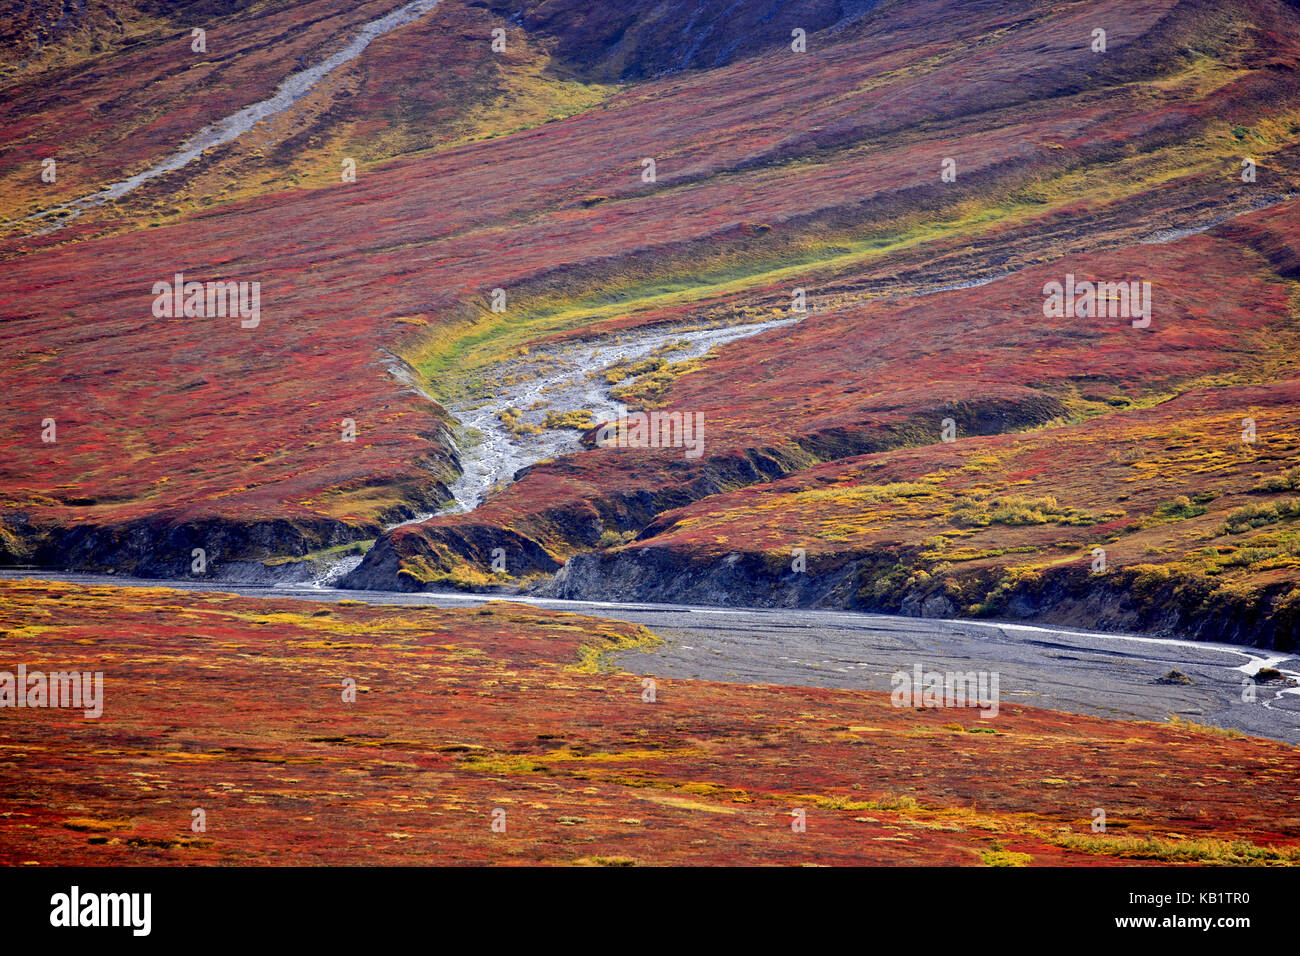 North America, the USA, Alaska, Denali national park, glacier valley, autumnal tundra, Stock Photo